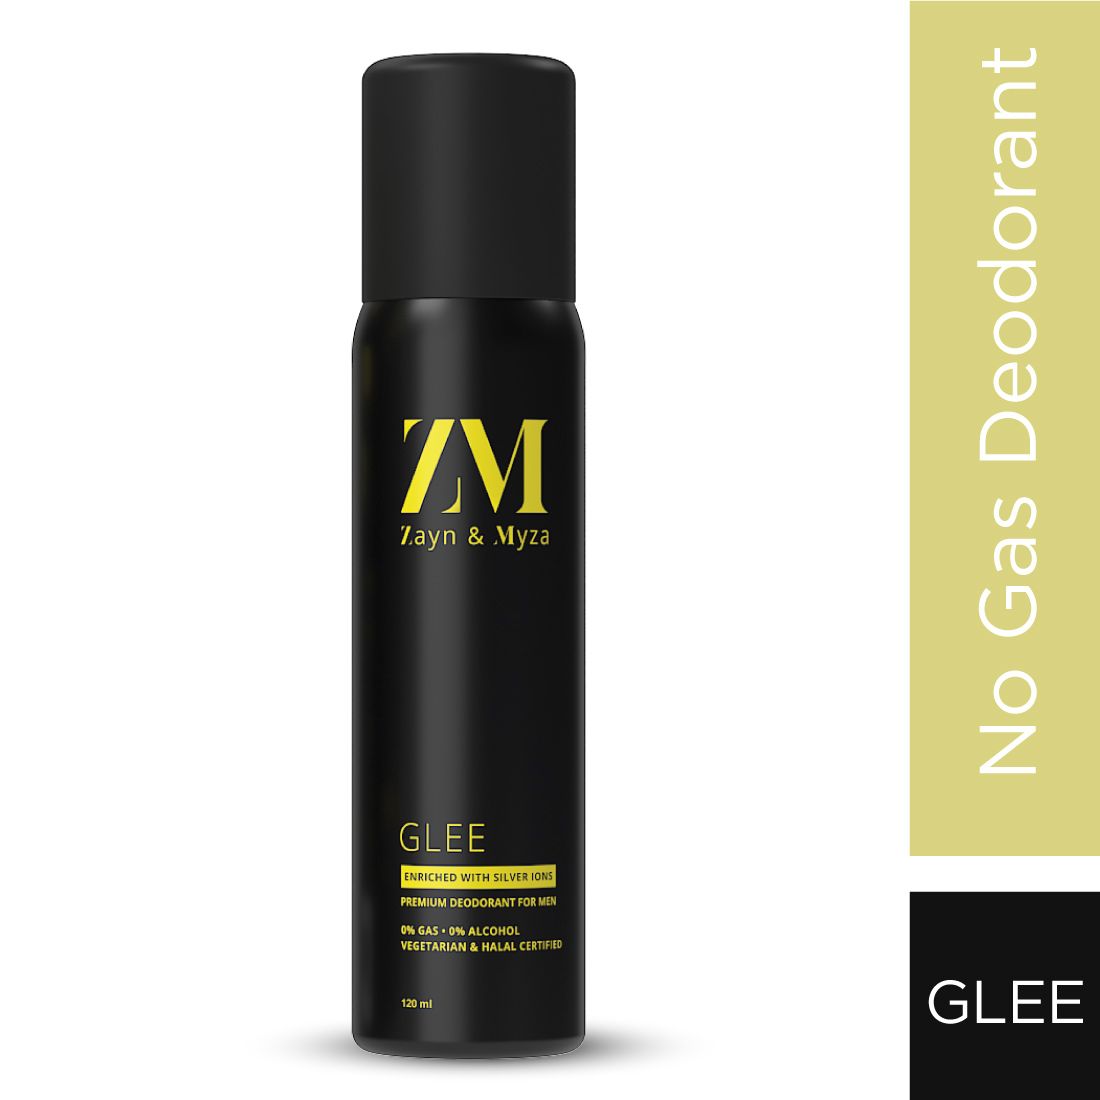 Zayn & Myza Glee Premium Men's Body Spray